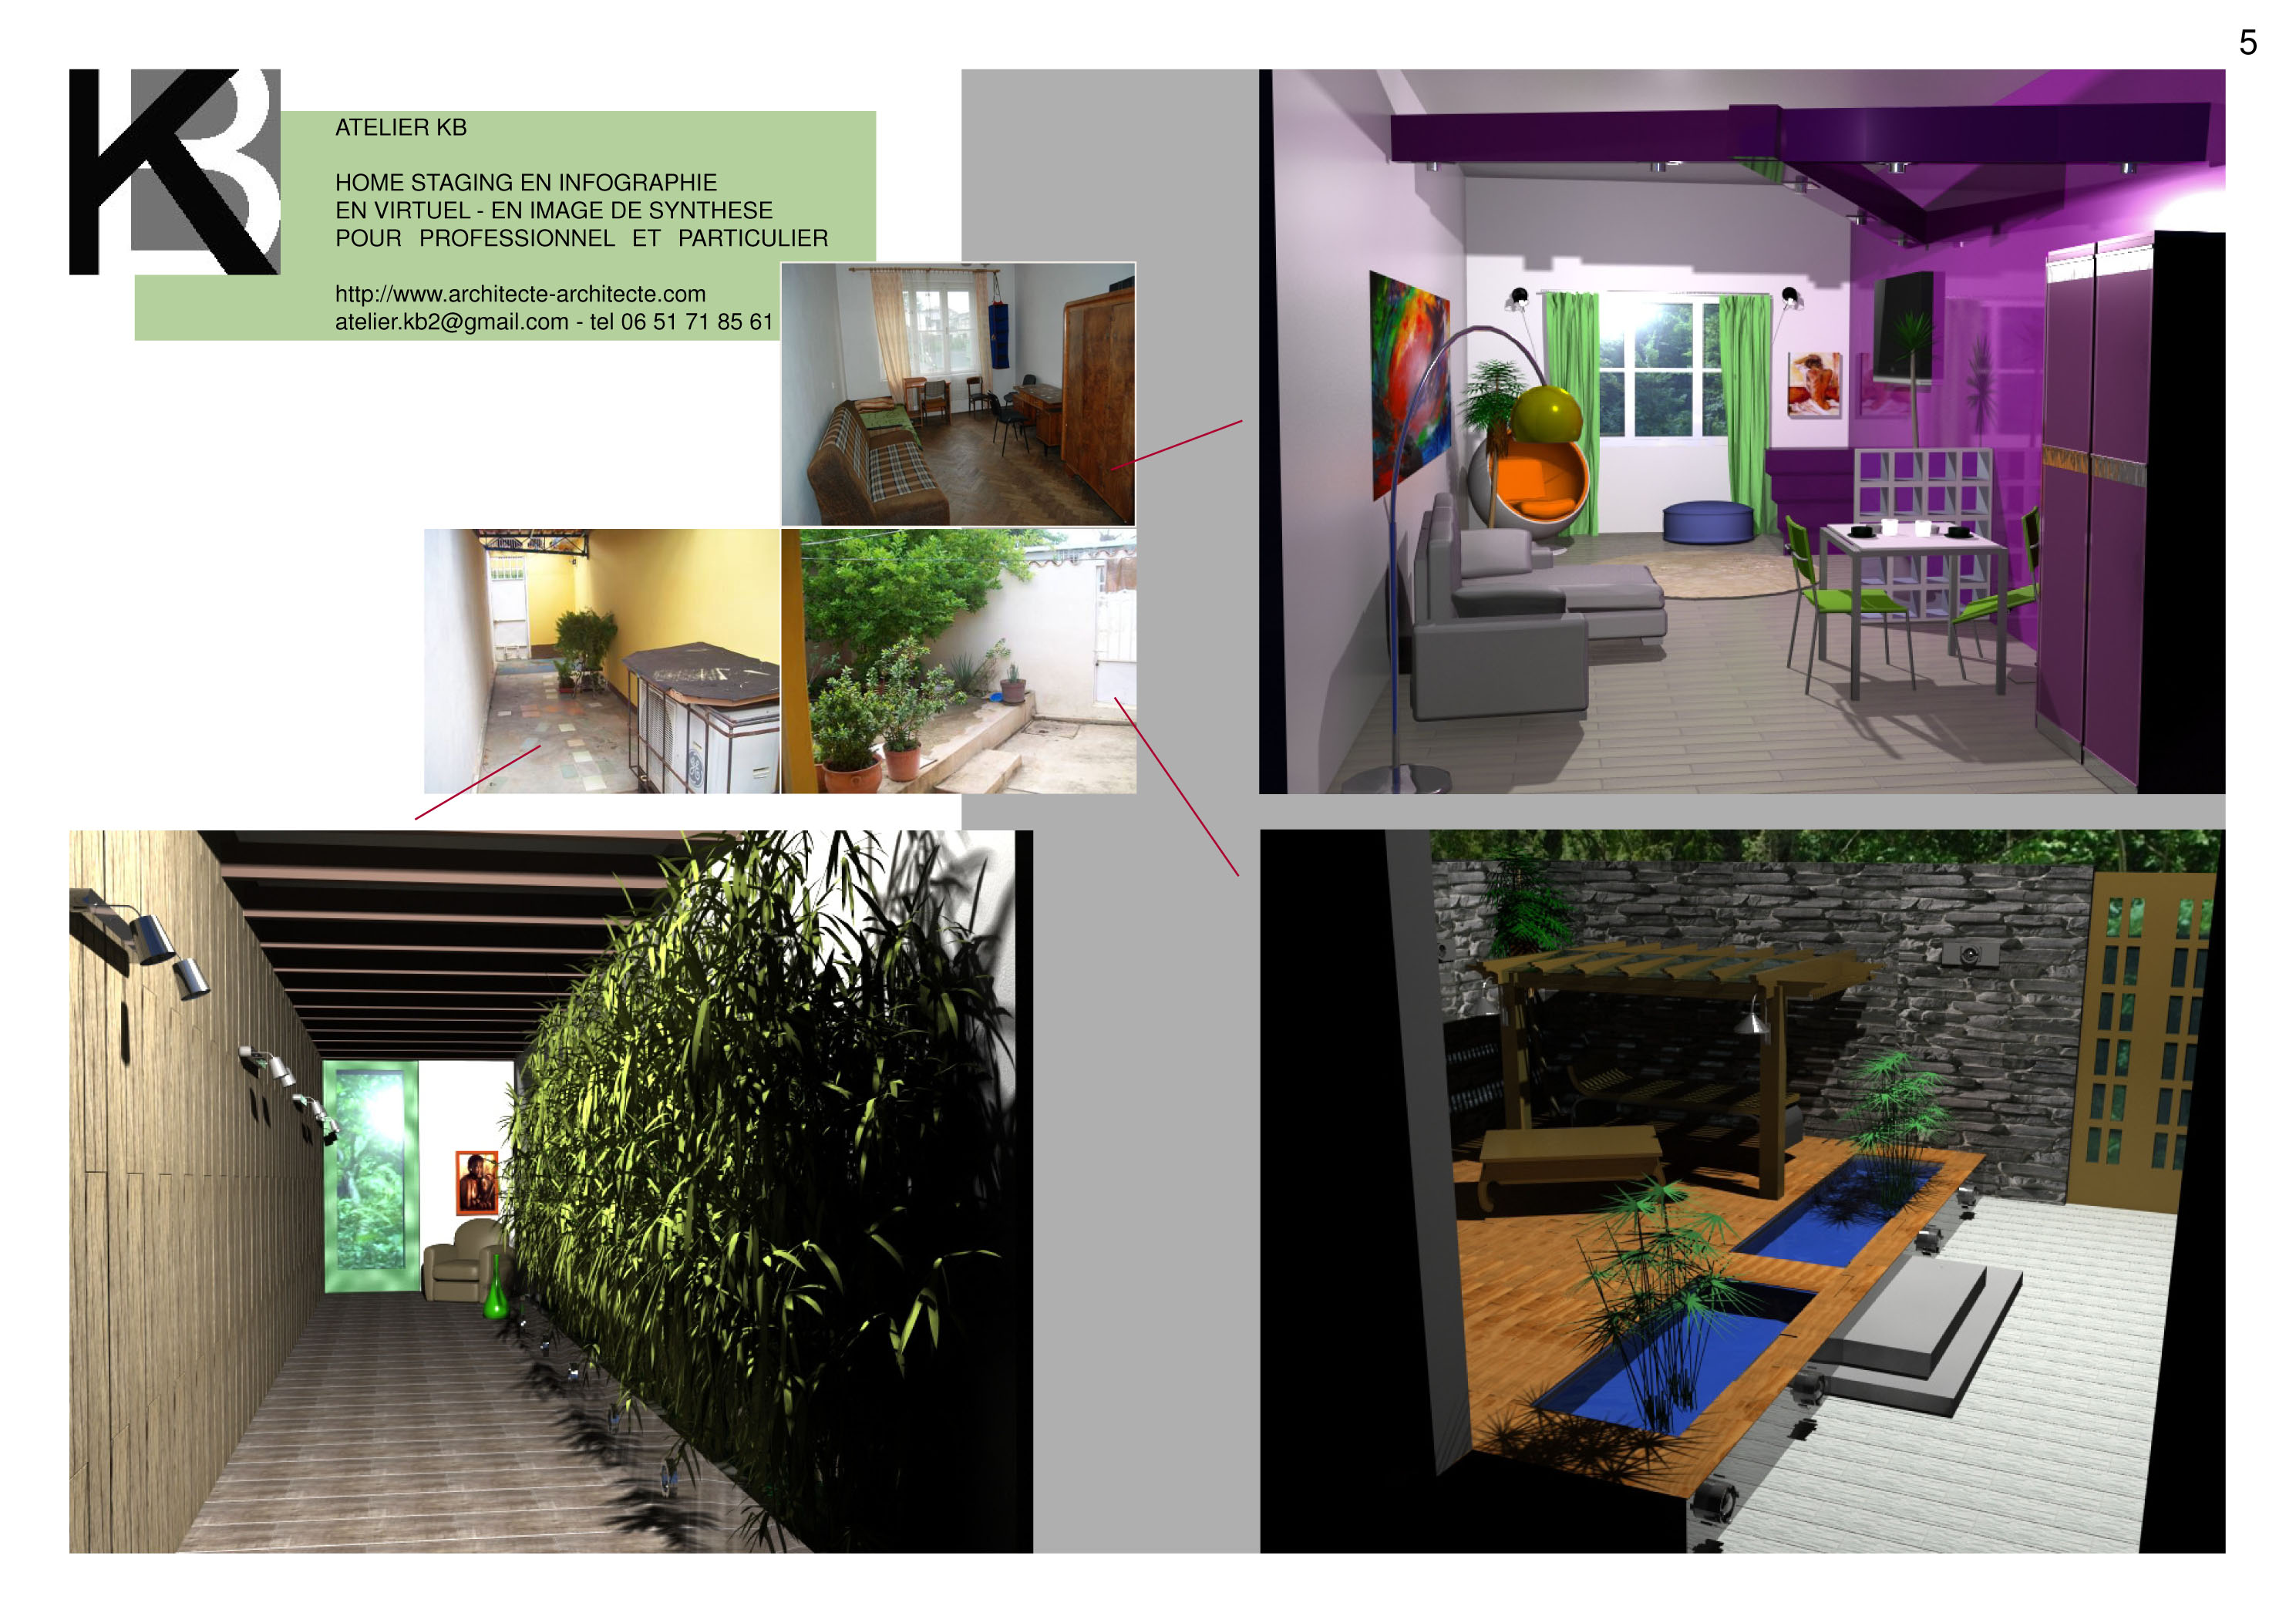 home staging en infographie, 3d, virtuel, image de synthese